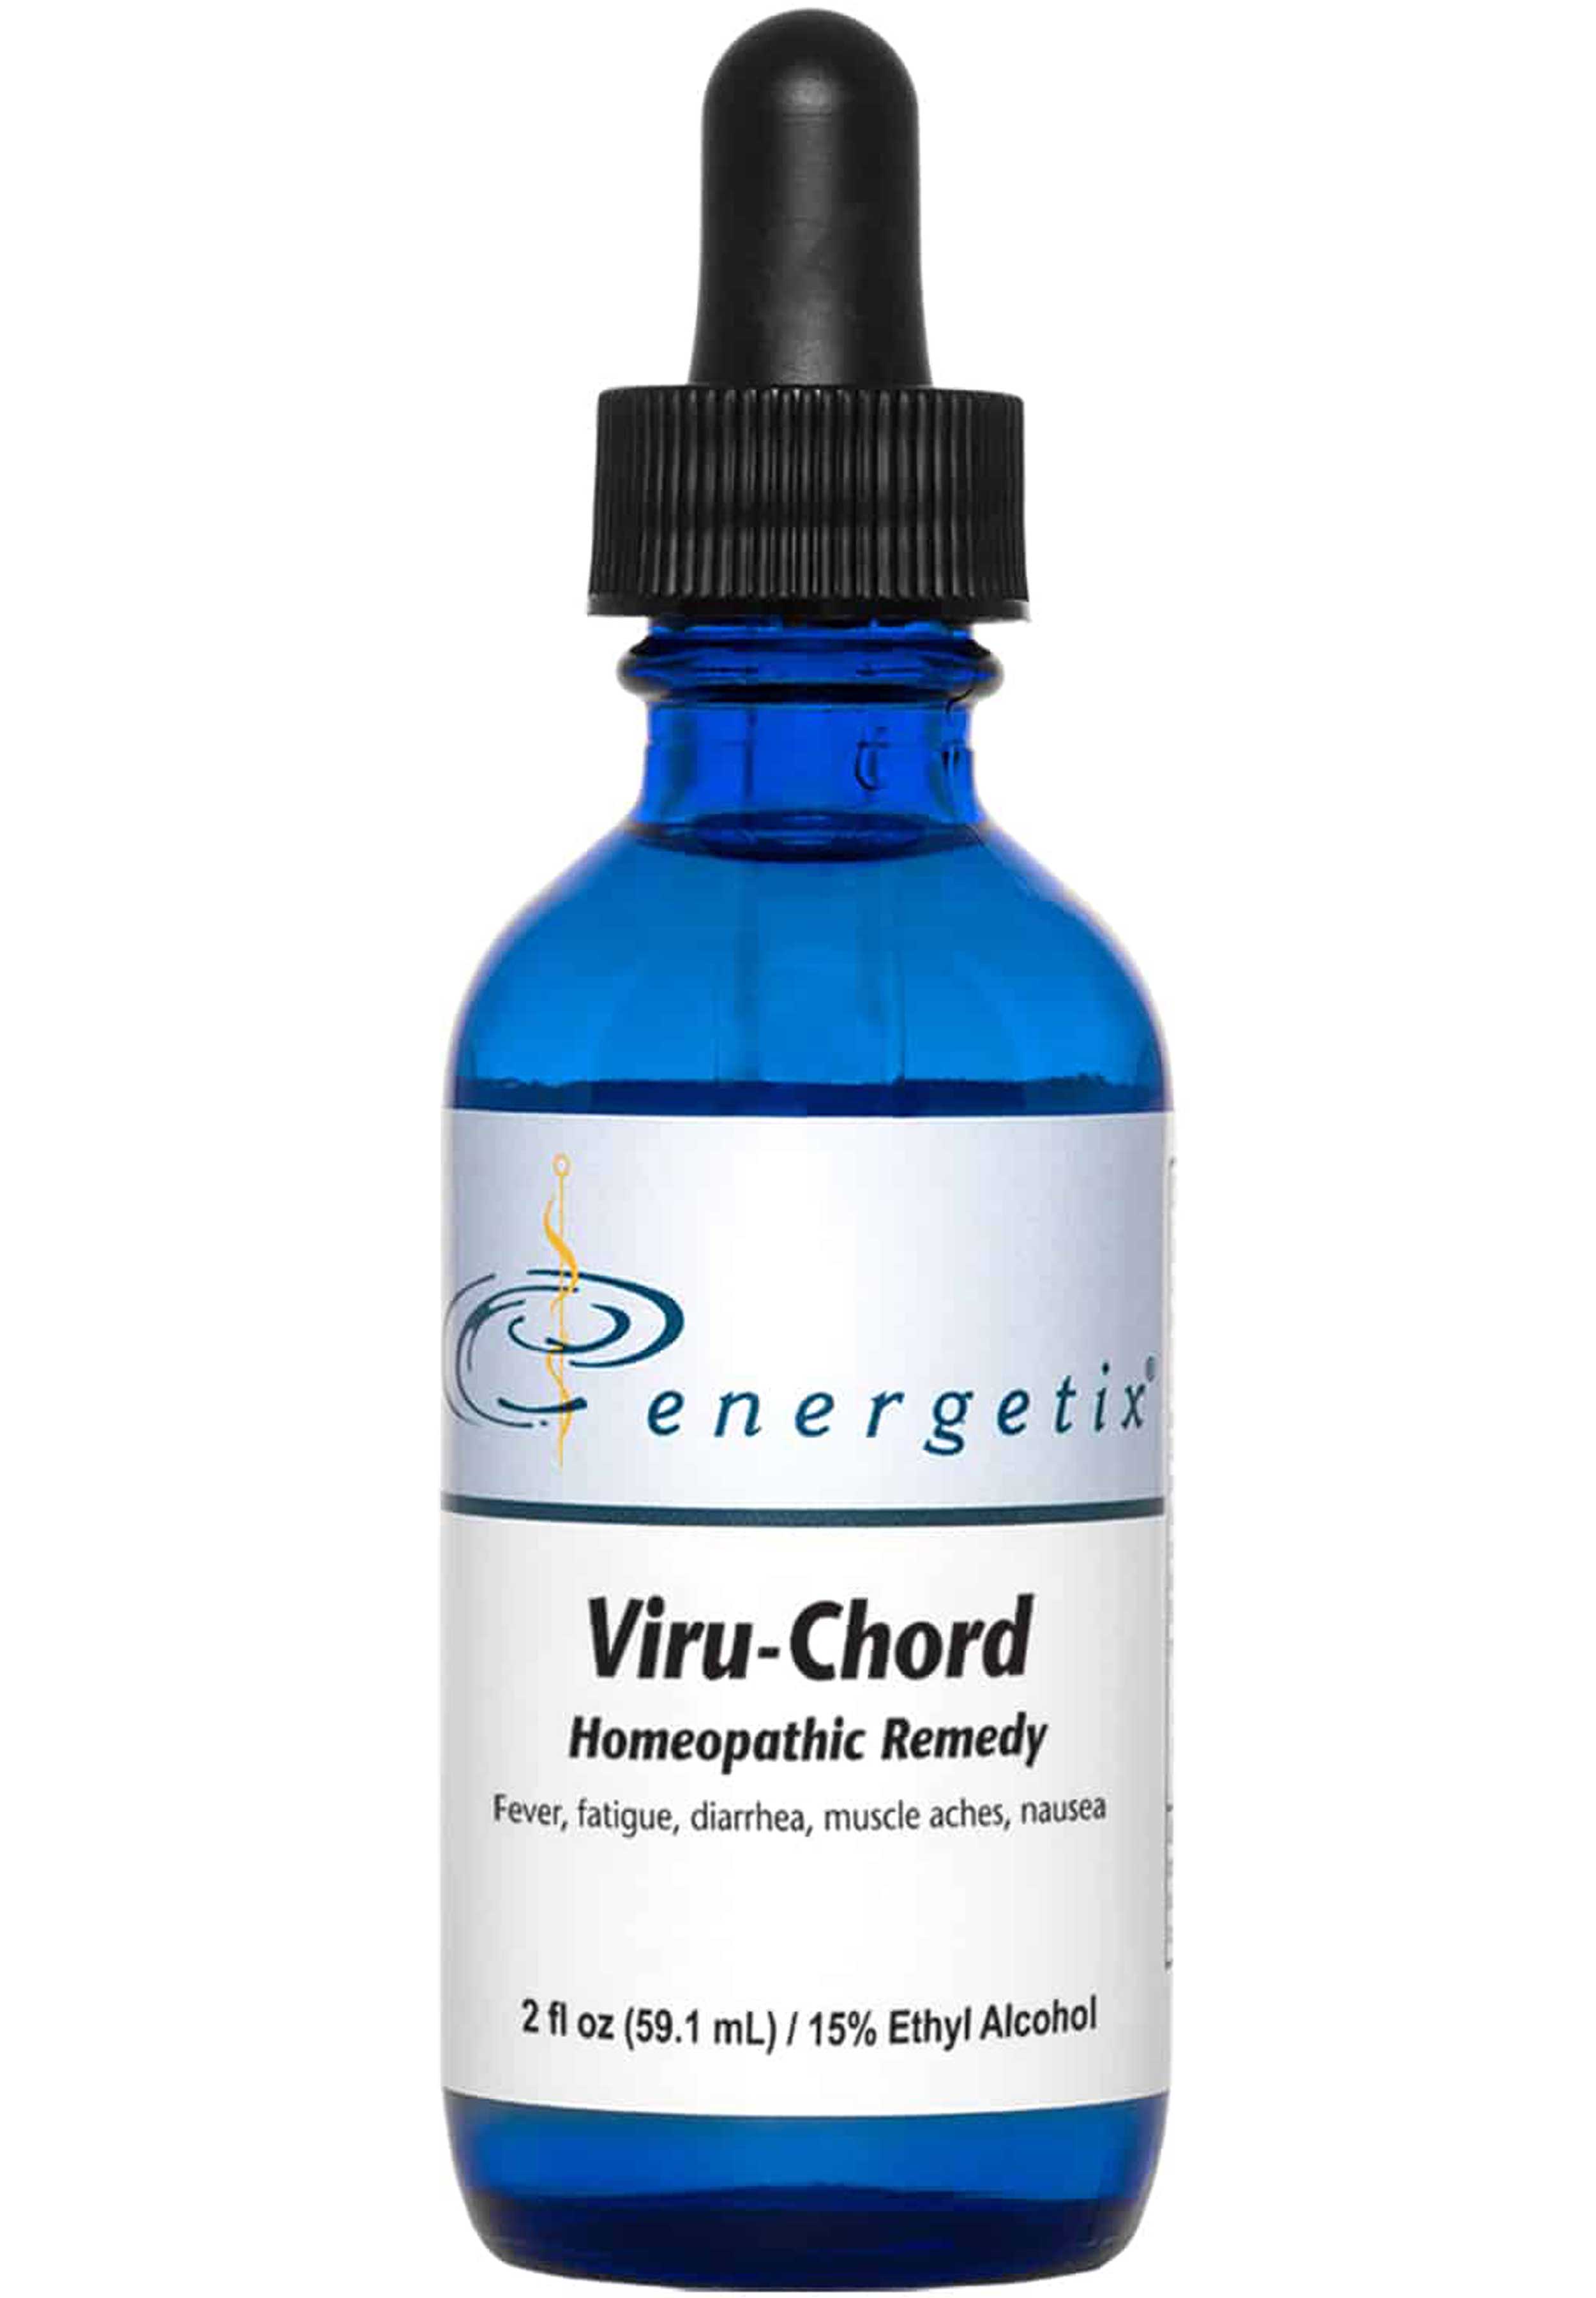 Energetix Viru-Chord